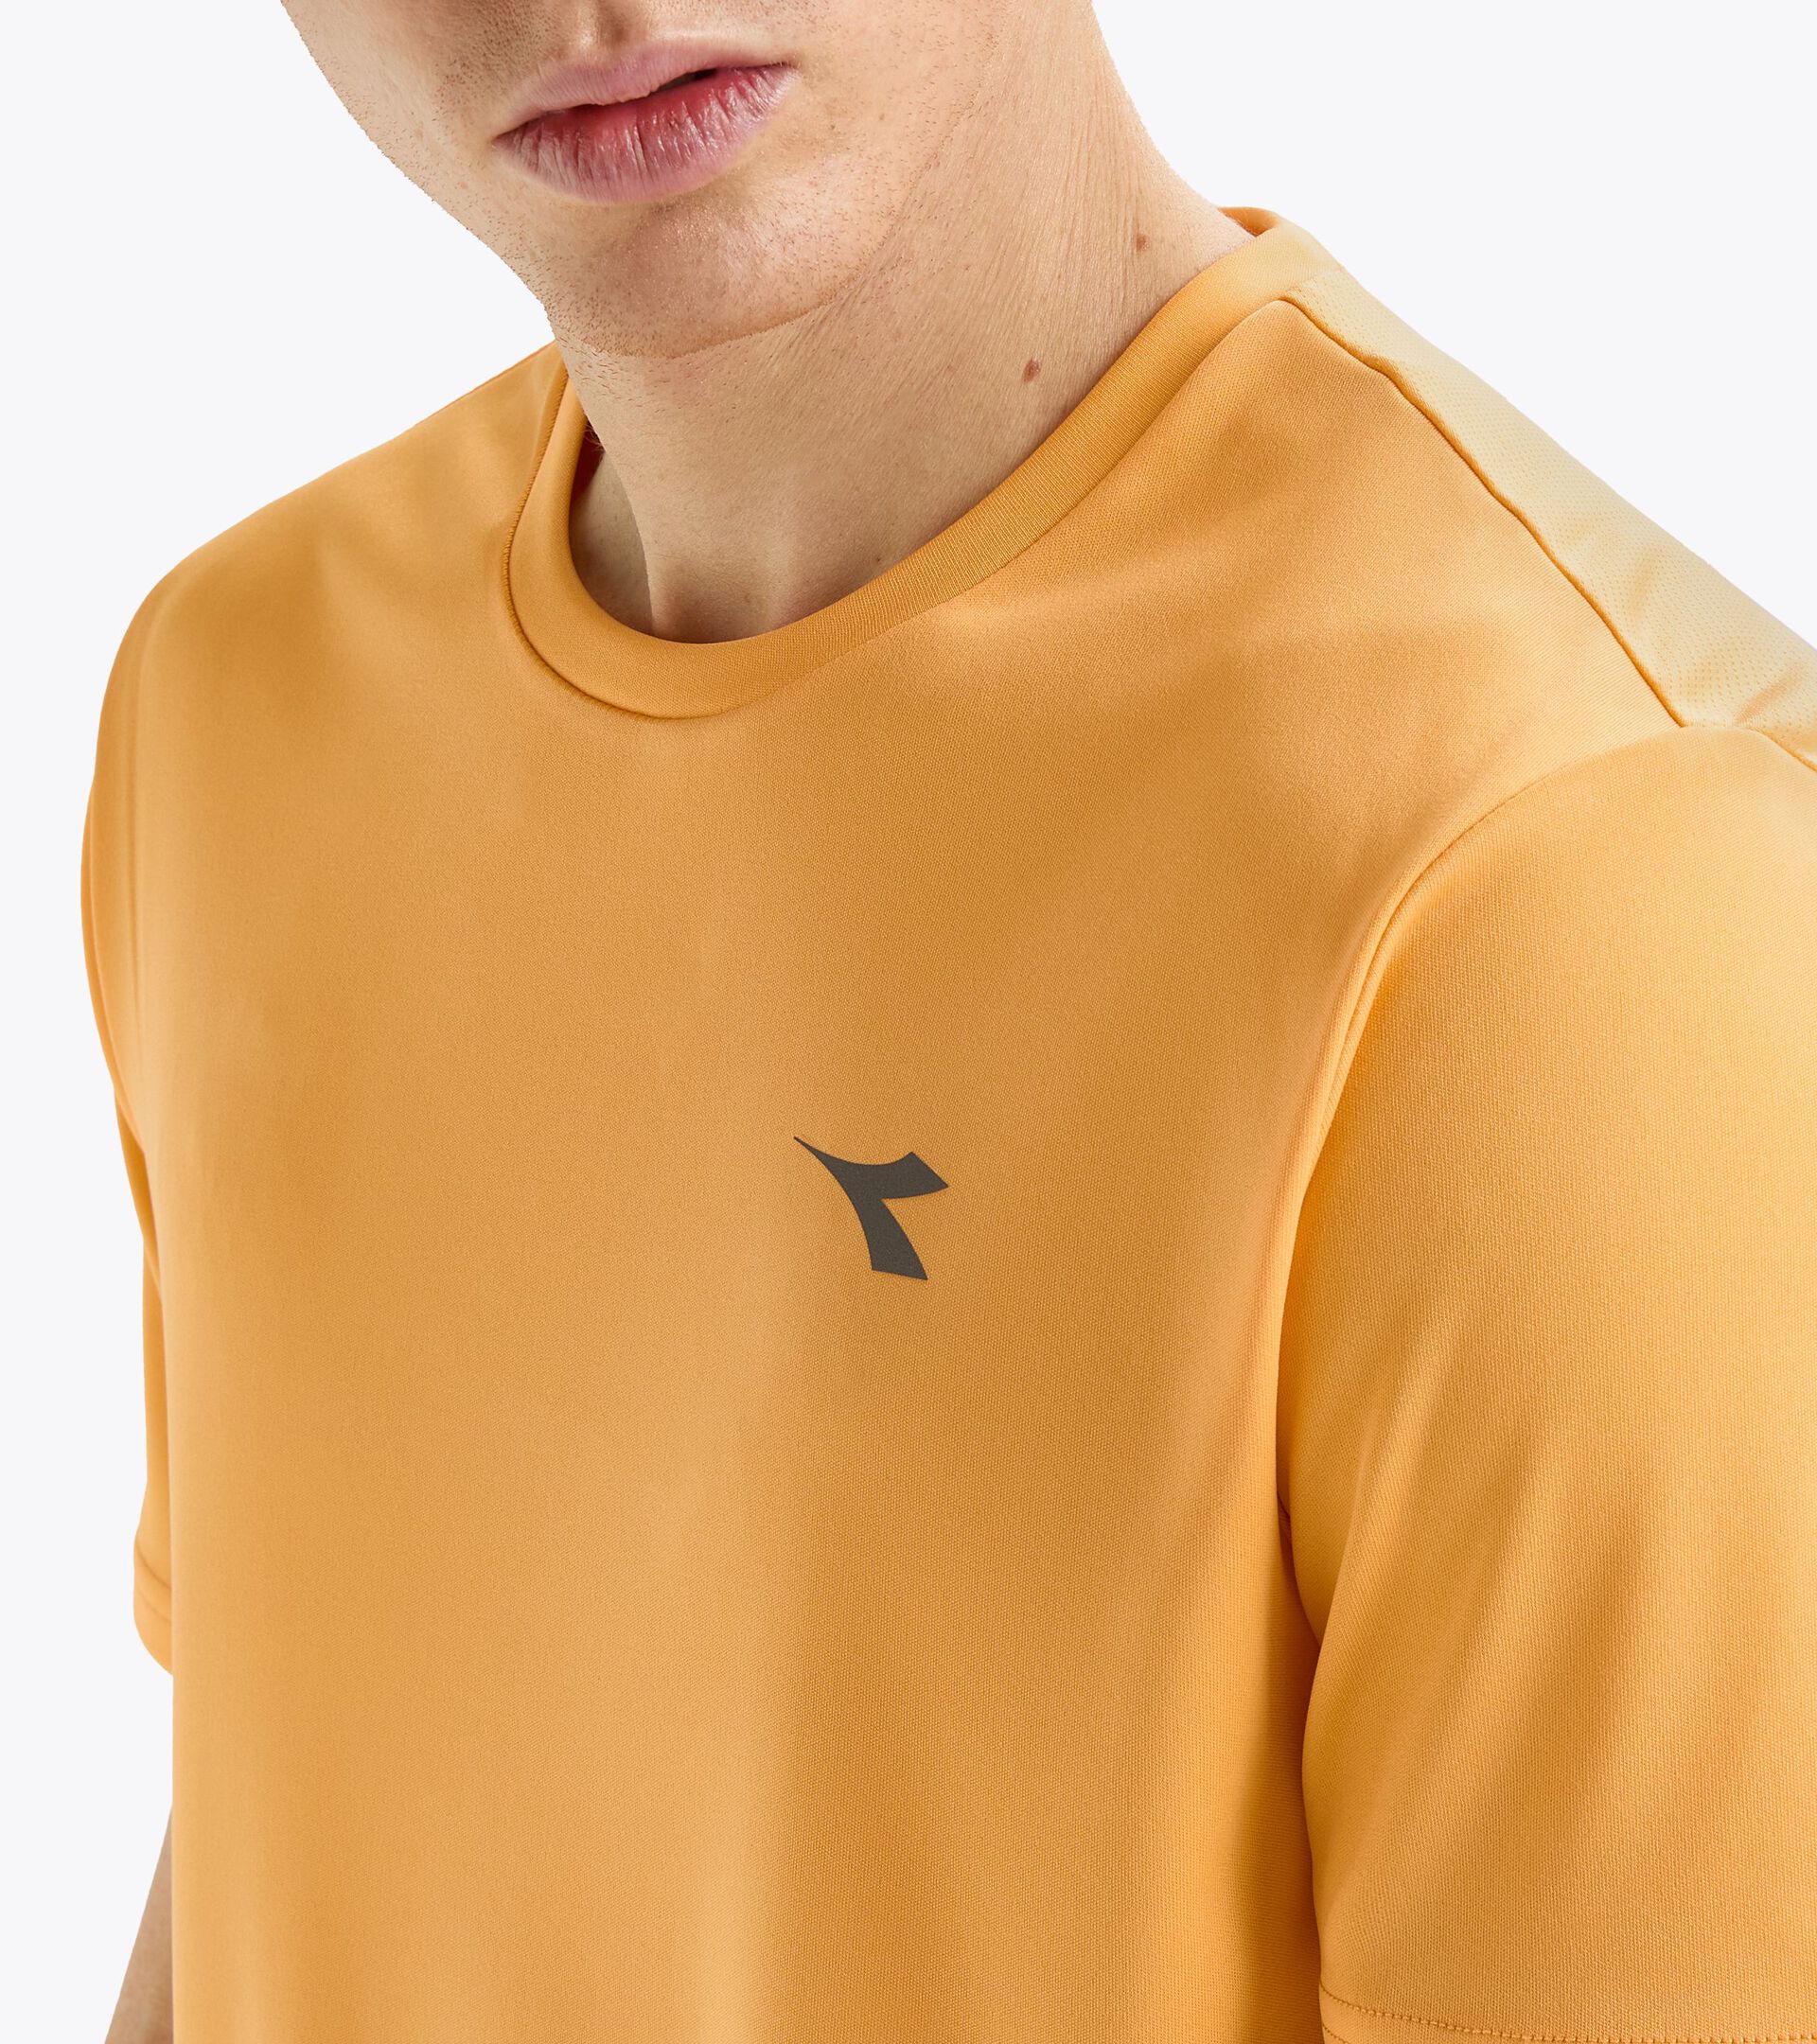 Sportliches T-Shirt - Herren SS T-SHIRT RUN KUMQUAT ORANGE - Diadora